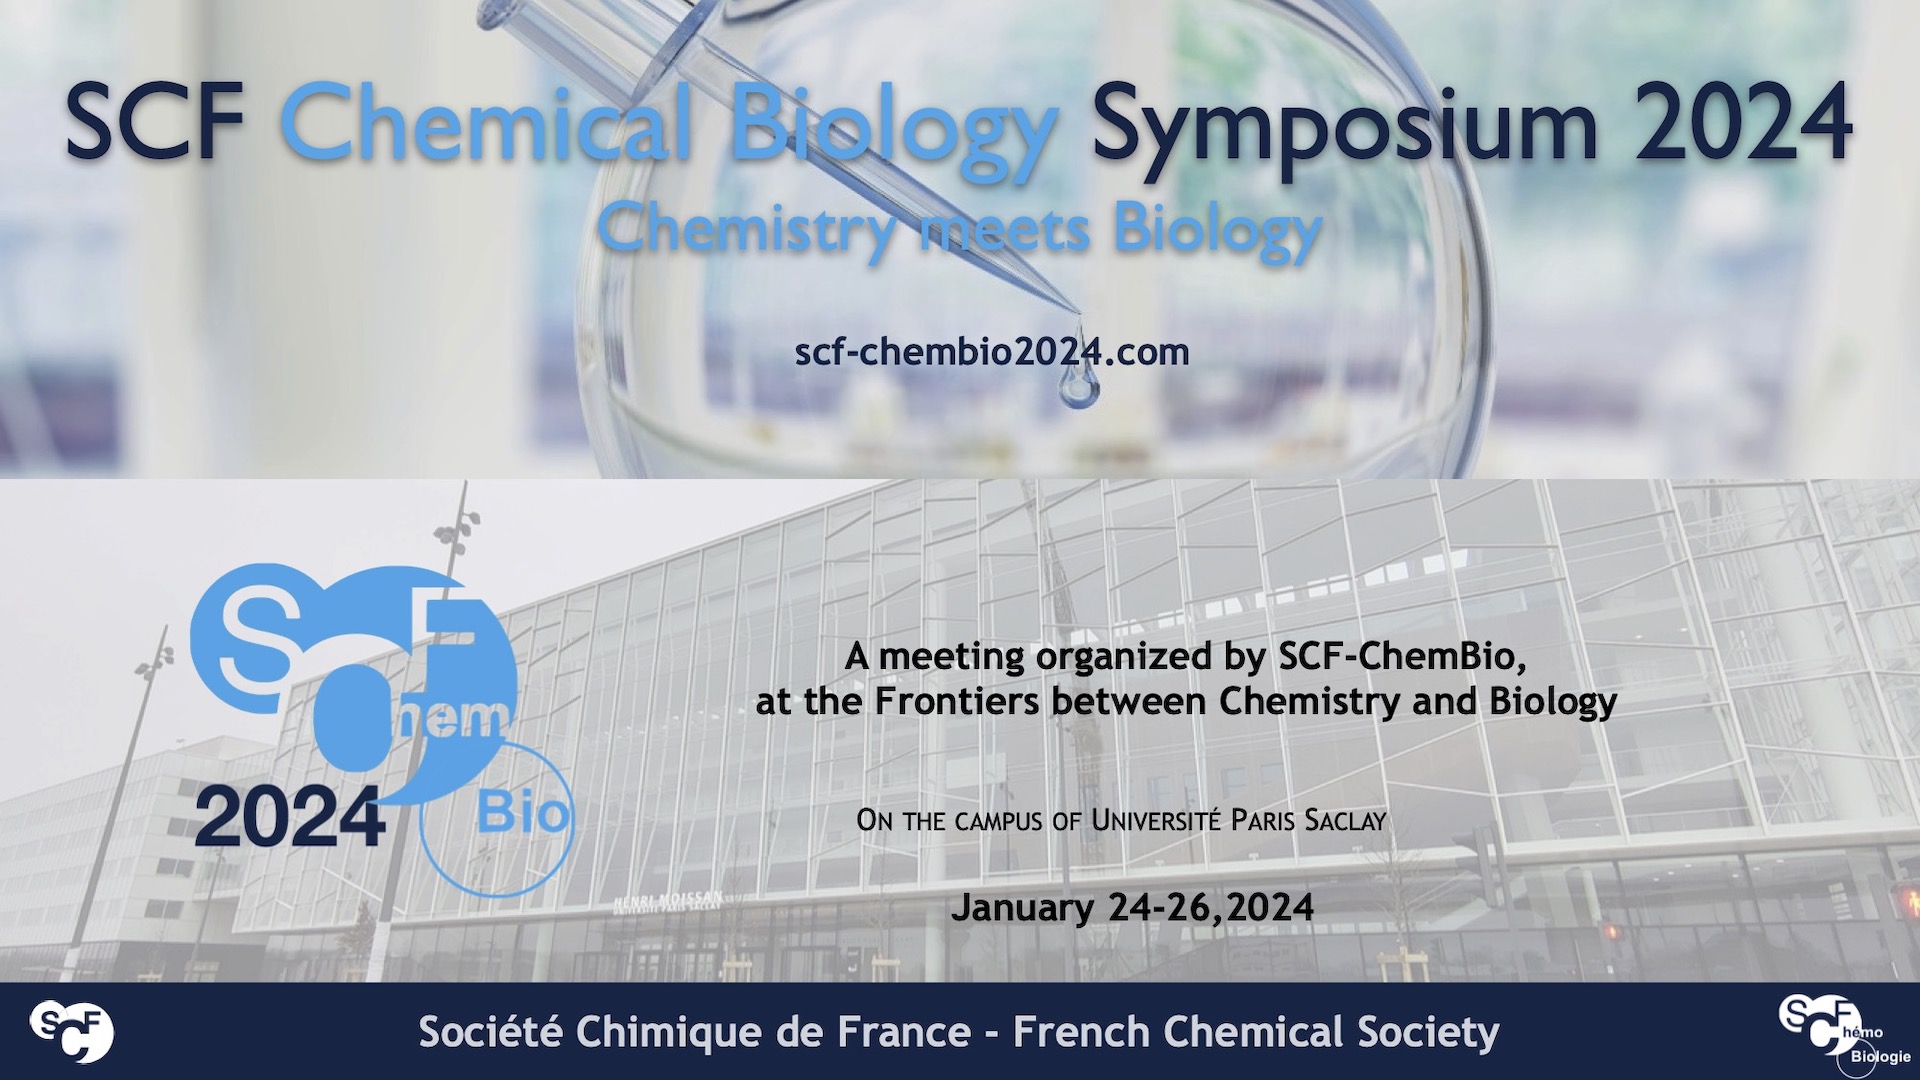 SCF Chemical Biology Symposium 2024 EuChemS